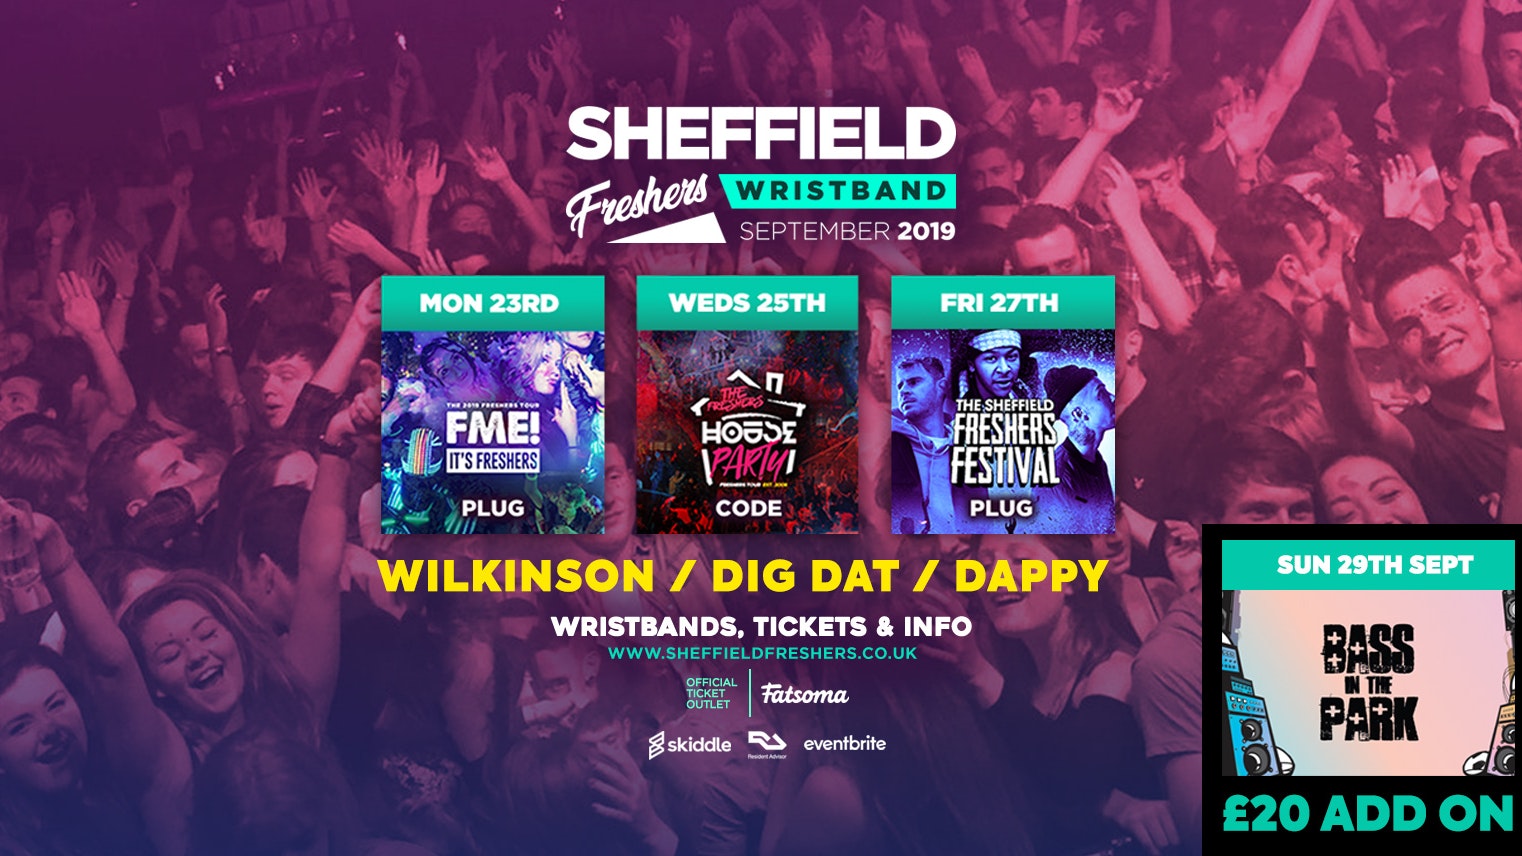 Sheffield Freshers Wristband 2019 ///